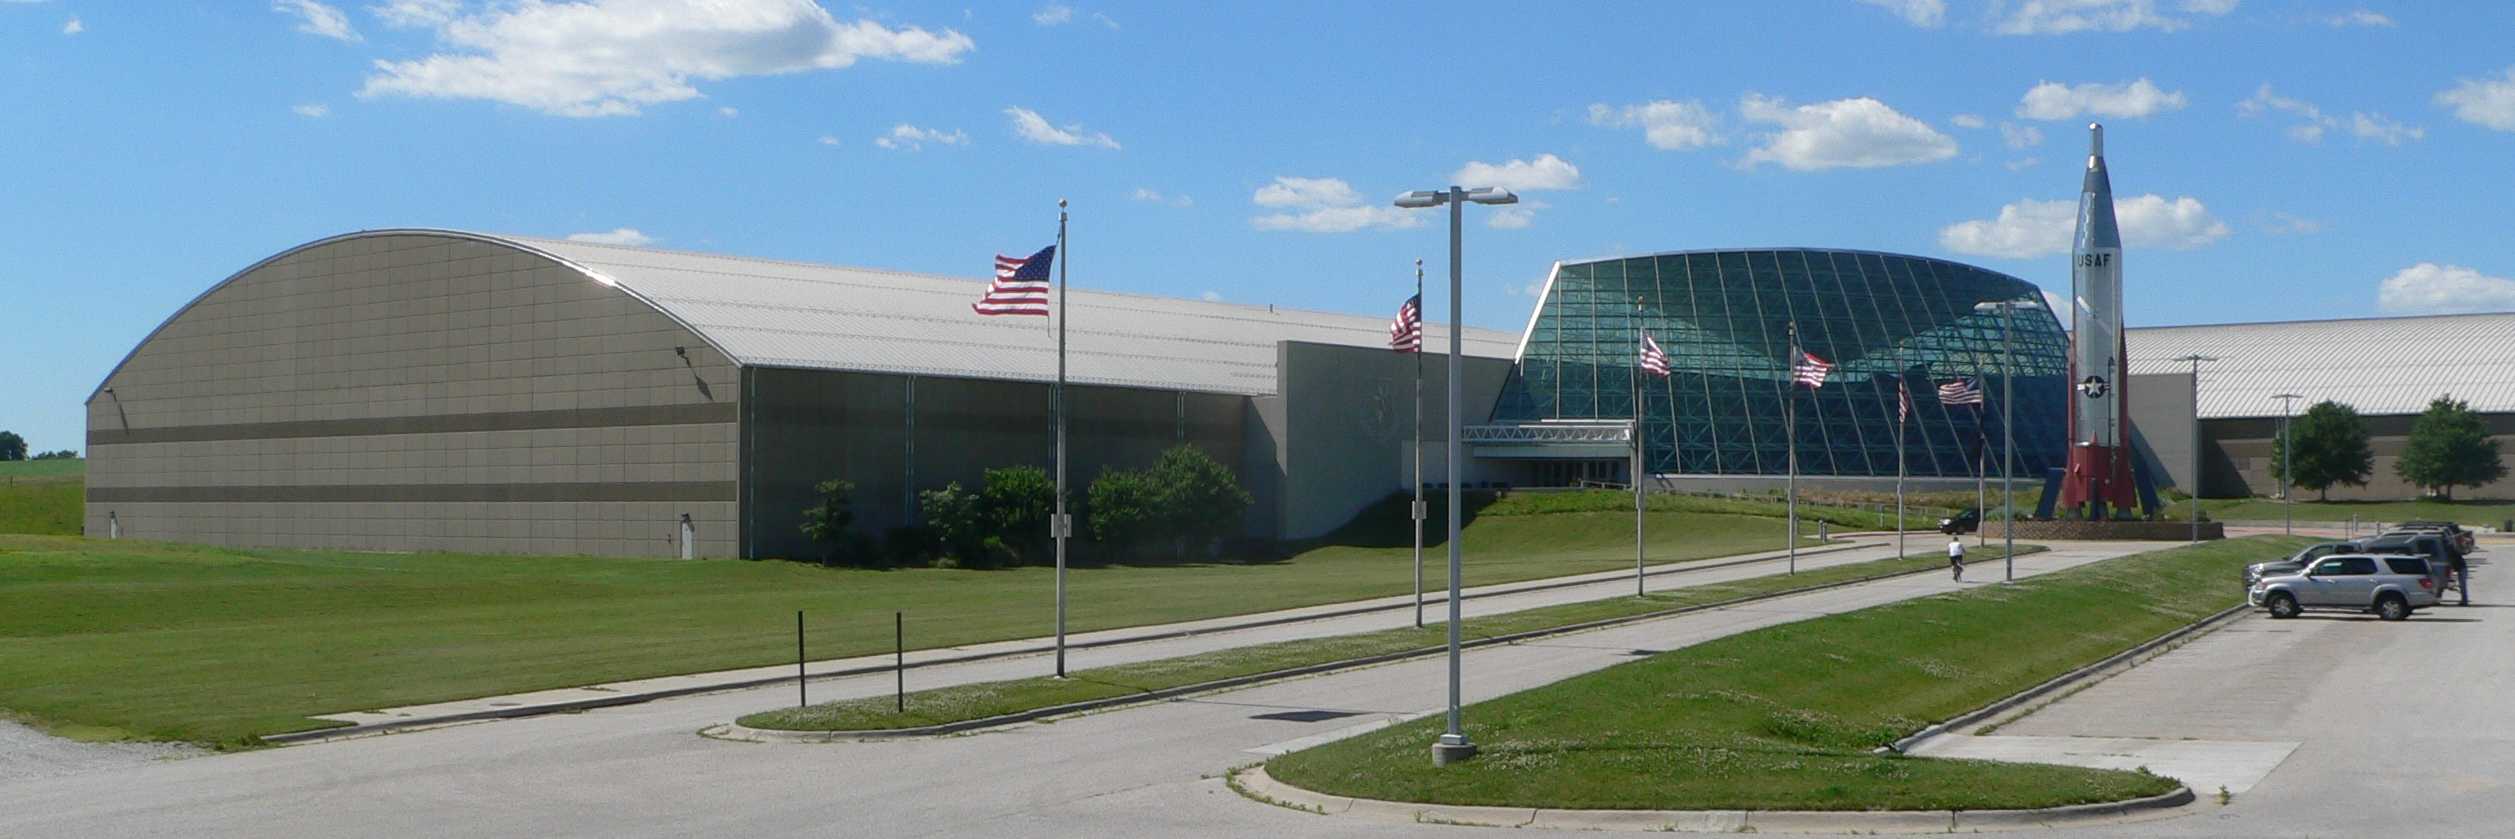 Exterior of Strategic Air and Space Museum, located on Nebraska Highway 66 southeast of Ashland, Nebraska.